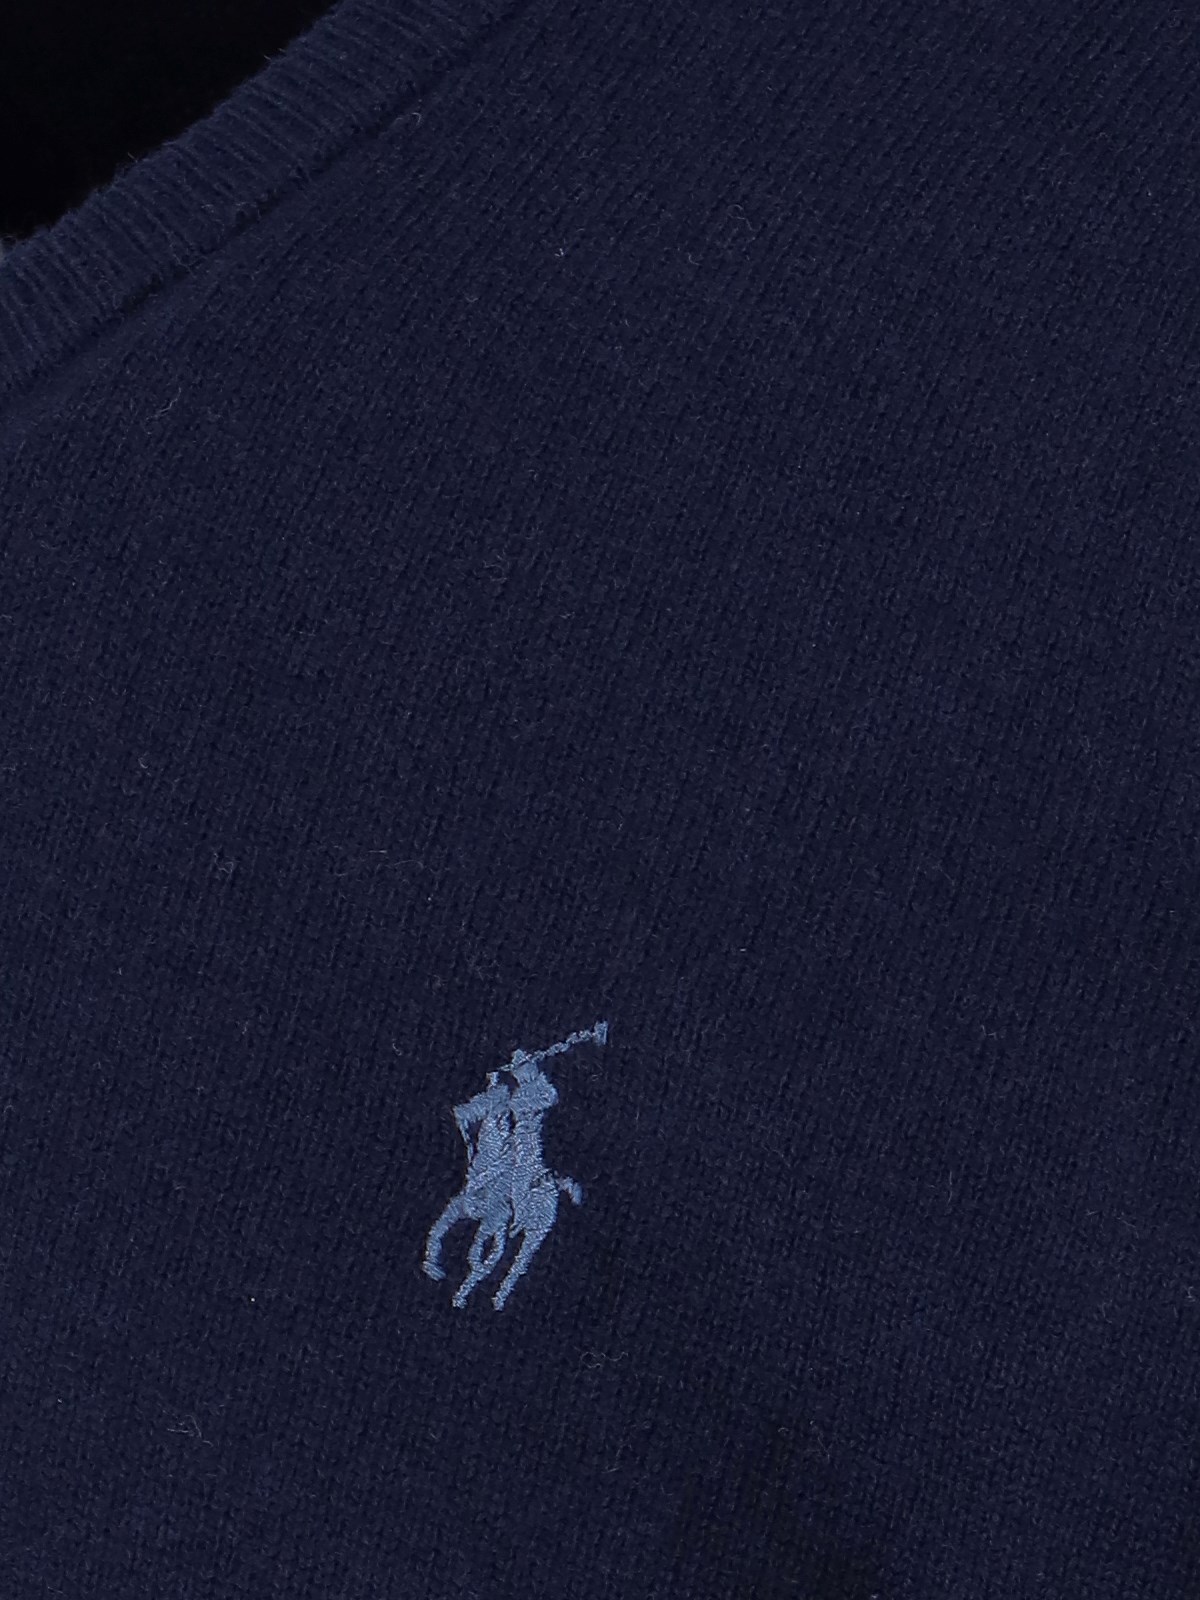 Polo ralph lauren Logo sweater available on SUGAR - 59350